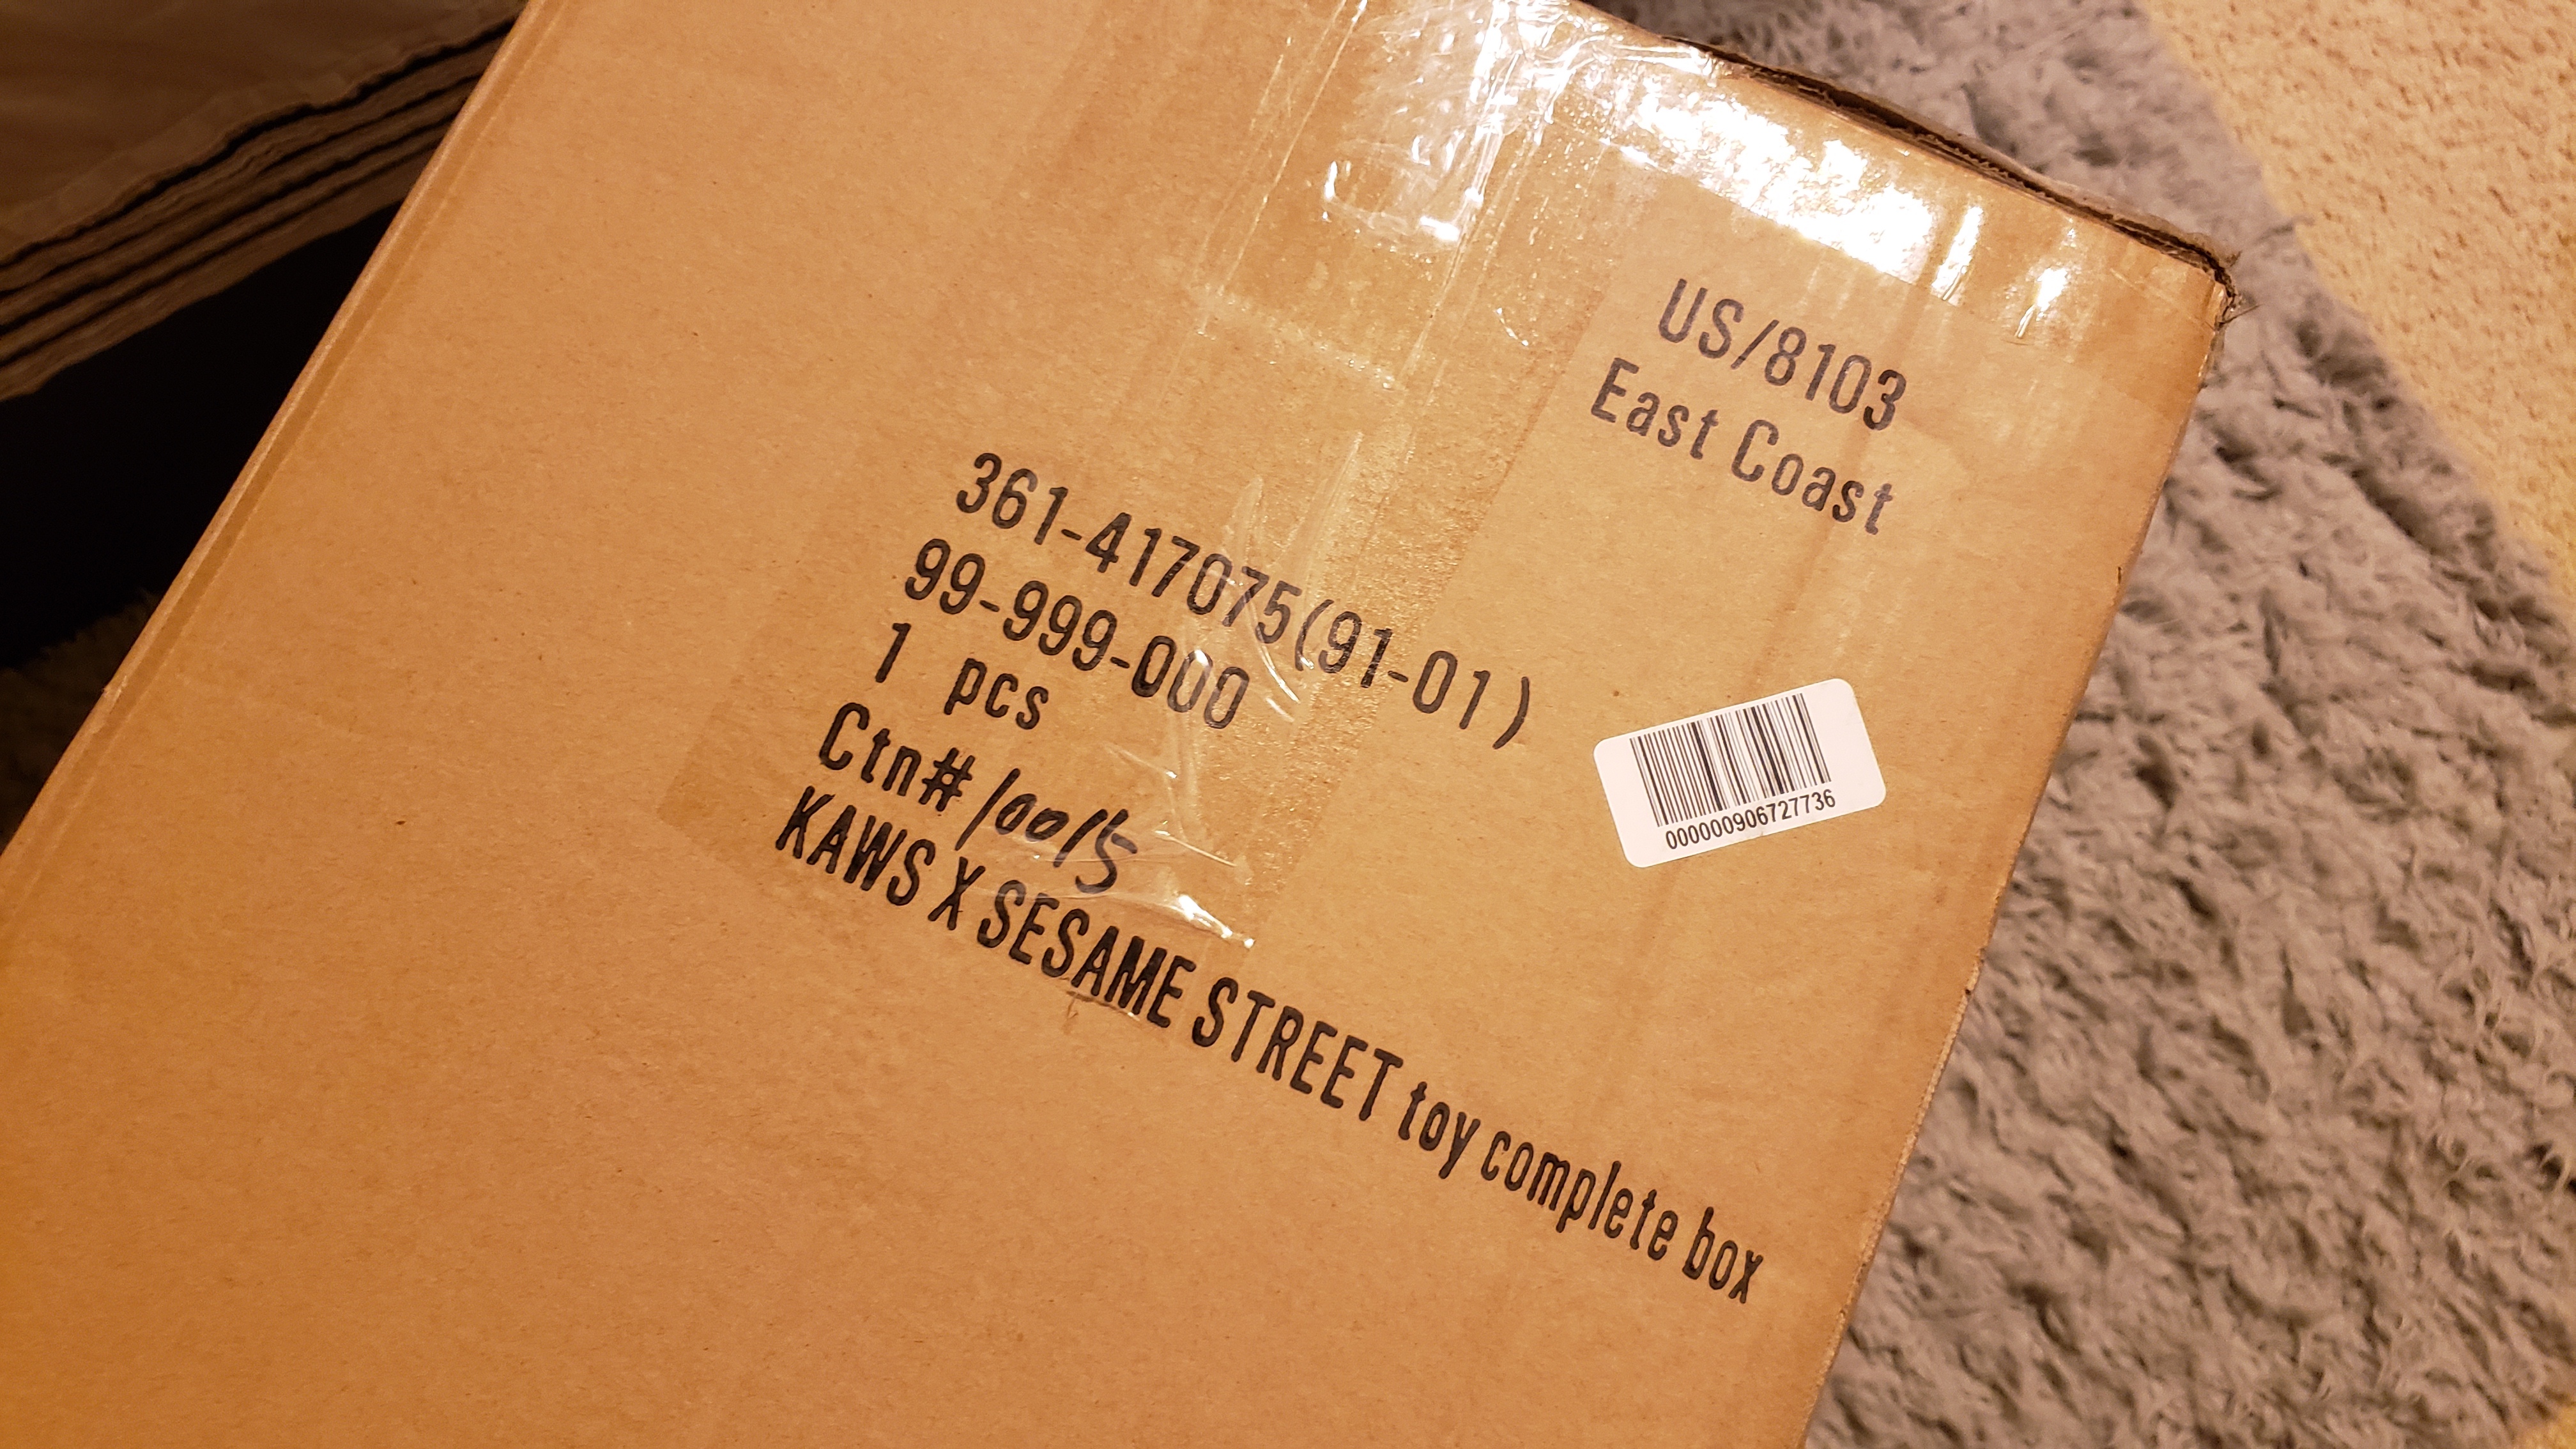 KAWS X SESAME STREET TOY COMPLETE BOX – Nakanari